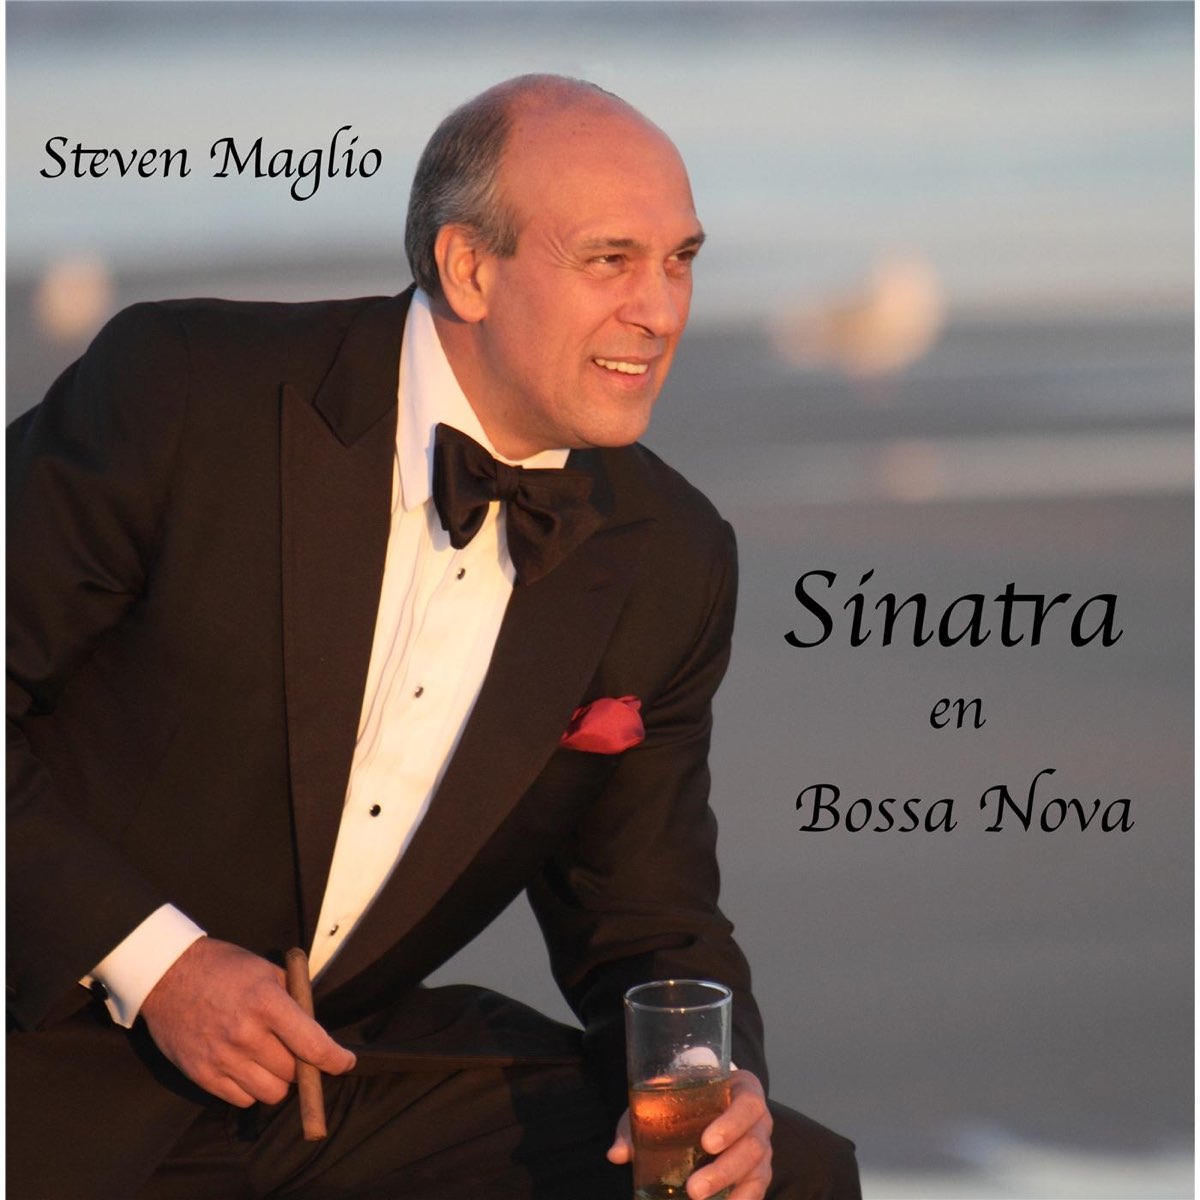 Sinatra En Bossa Nova - Album by Steven Maglio - Apple Music